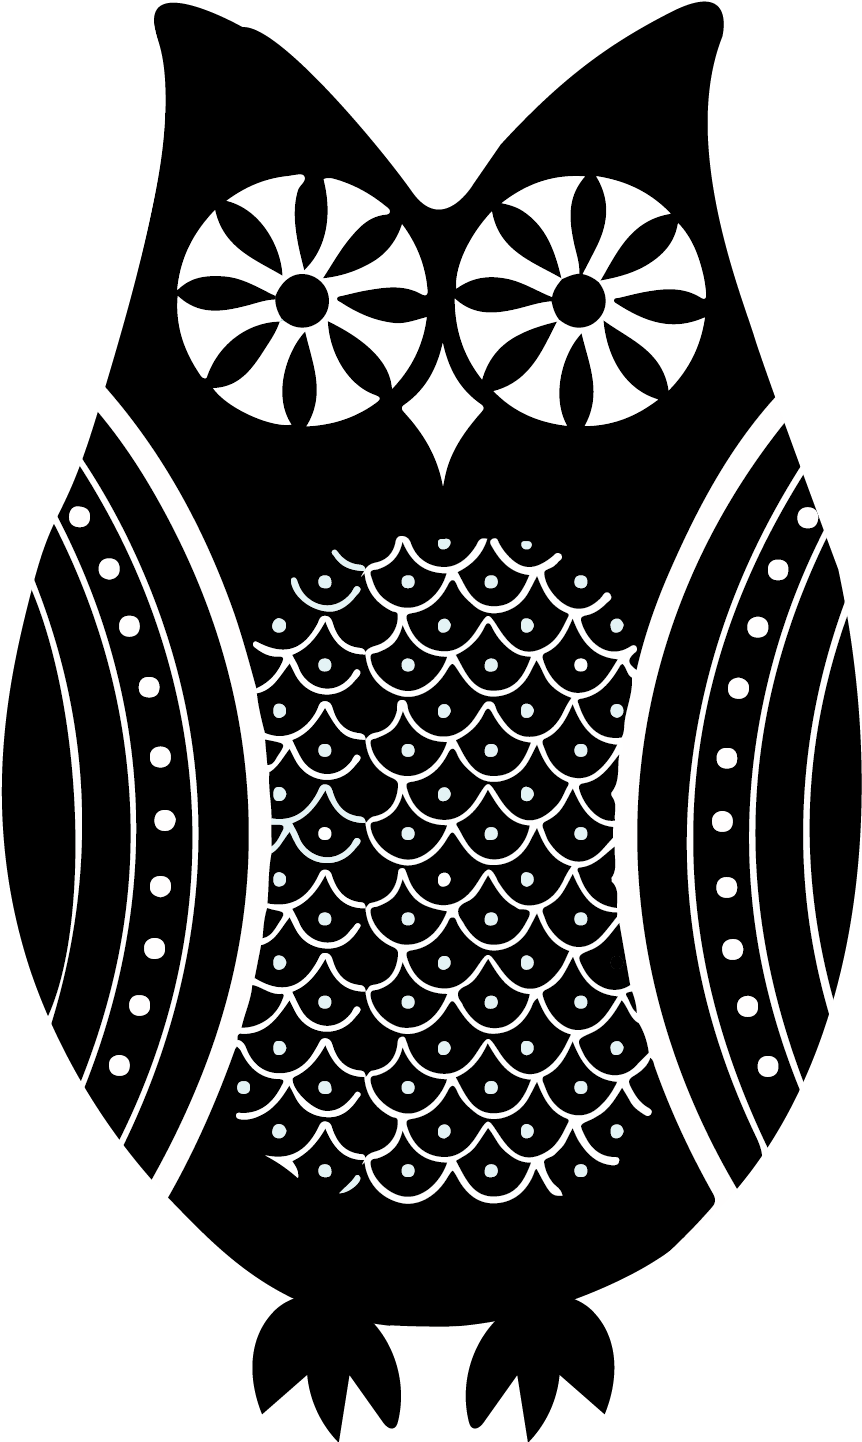 Owl Clipped Mask 01 Owl Clipped Maskb&w - Emblem (1056x1492)